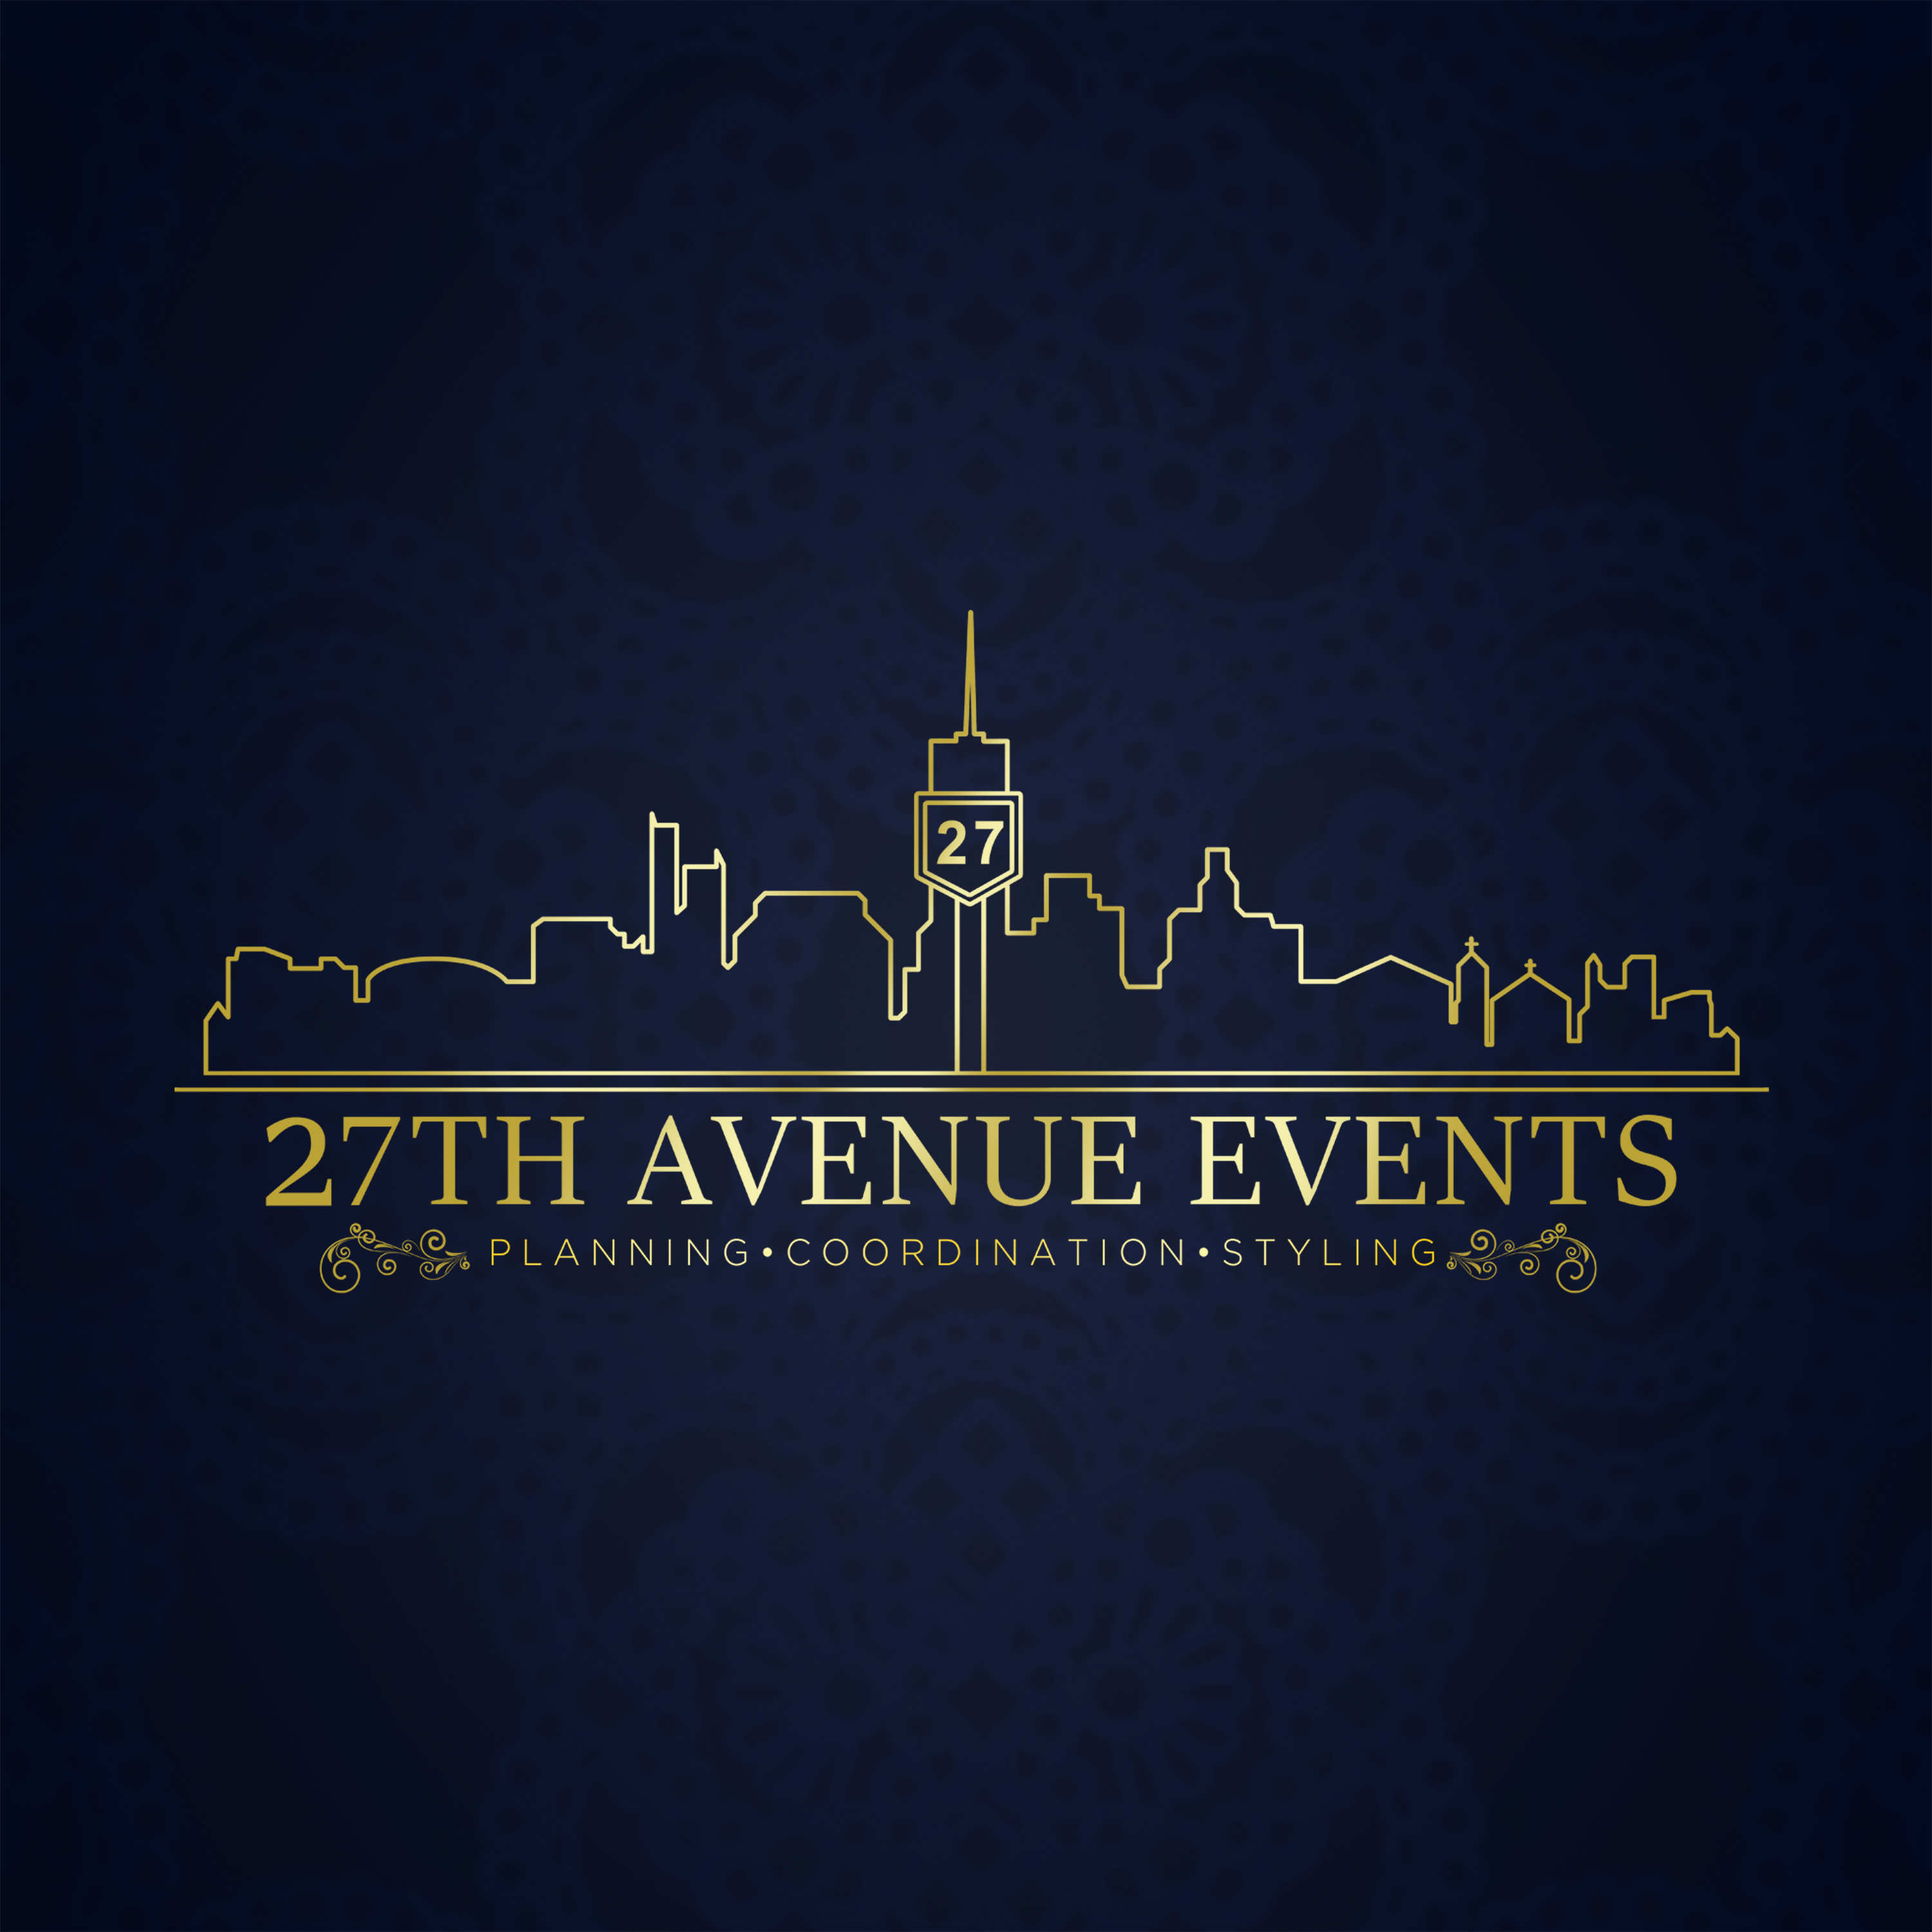 27th Avenue Events